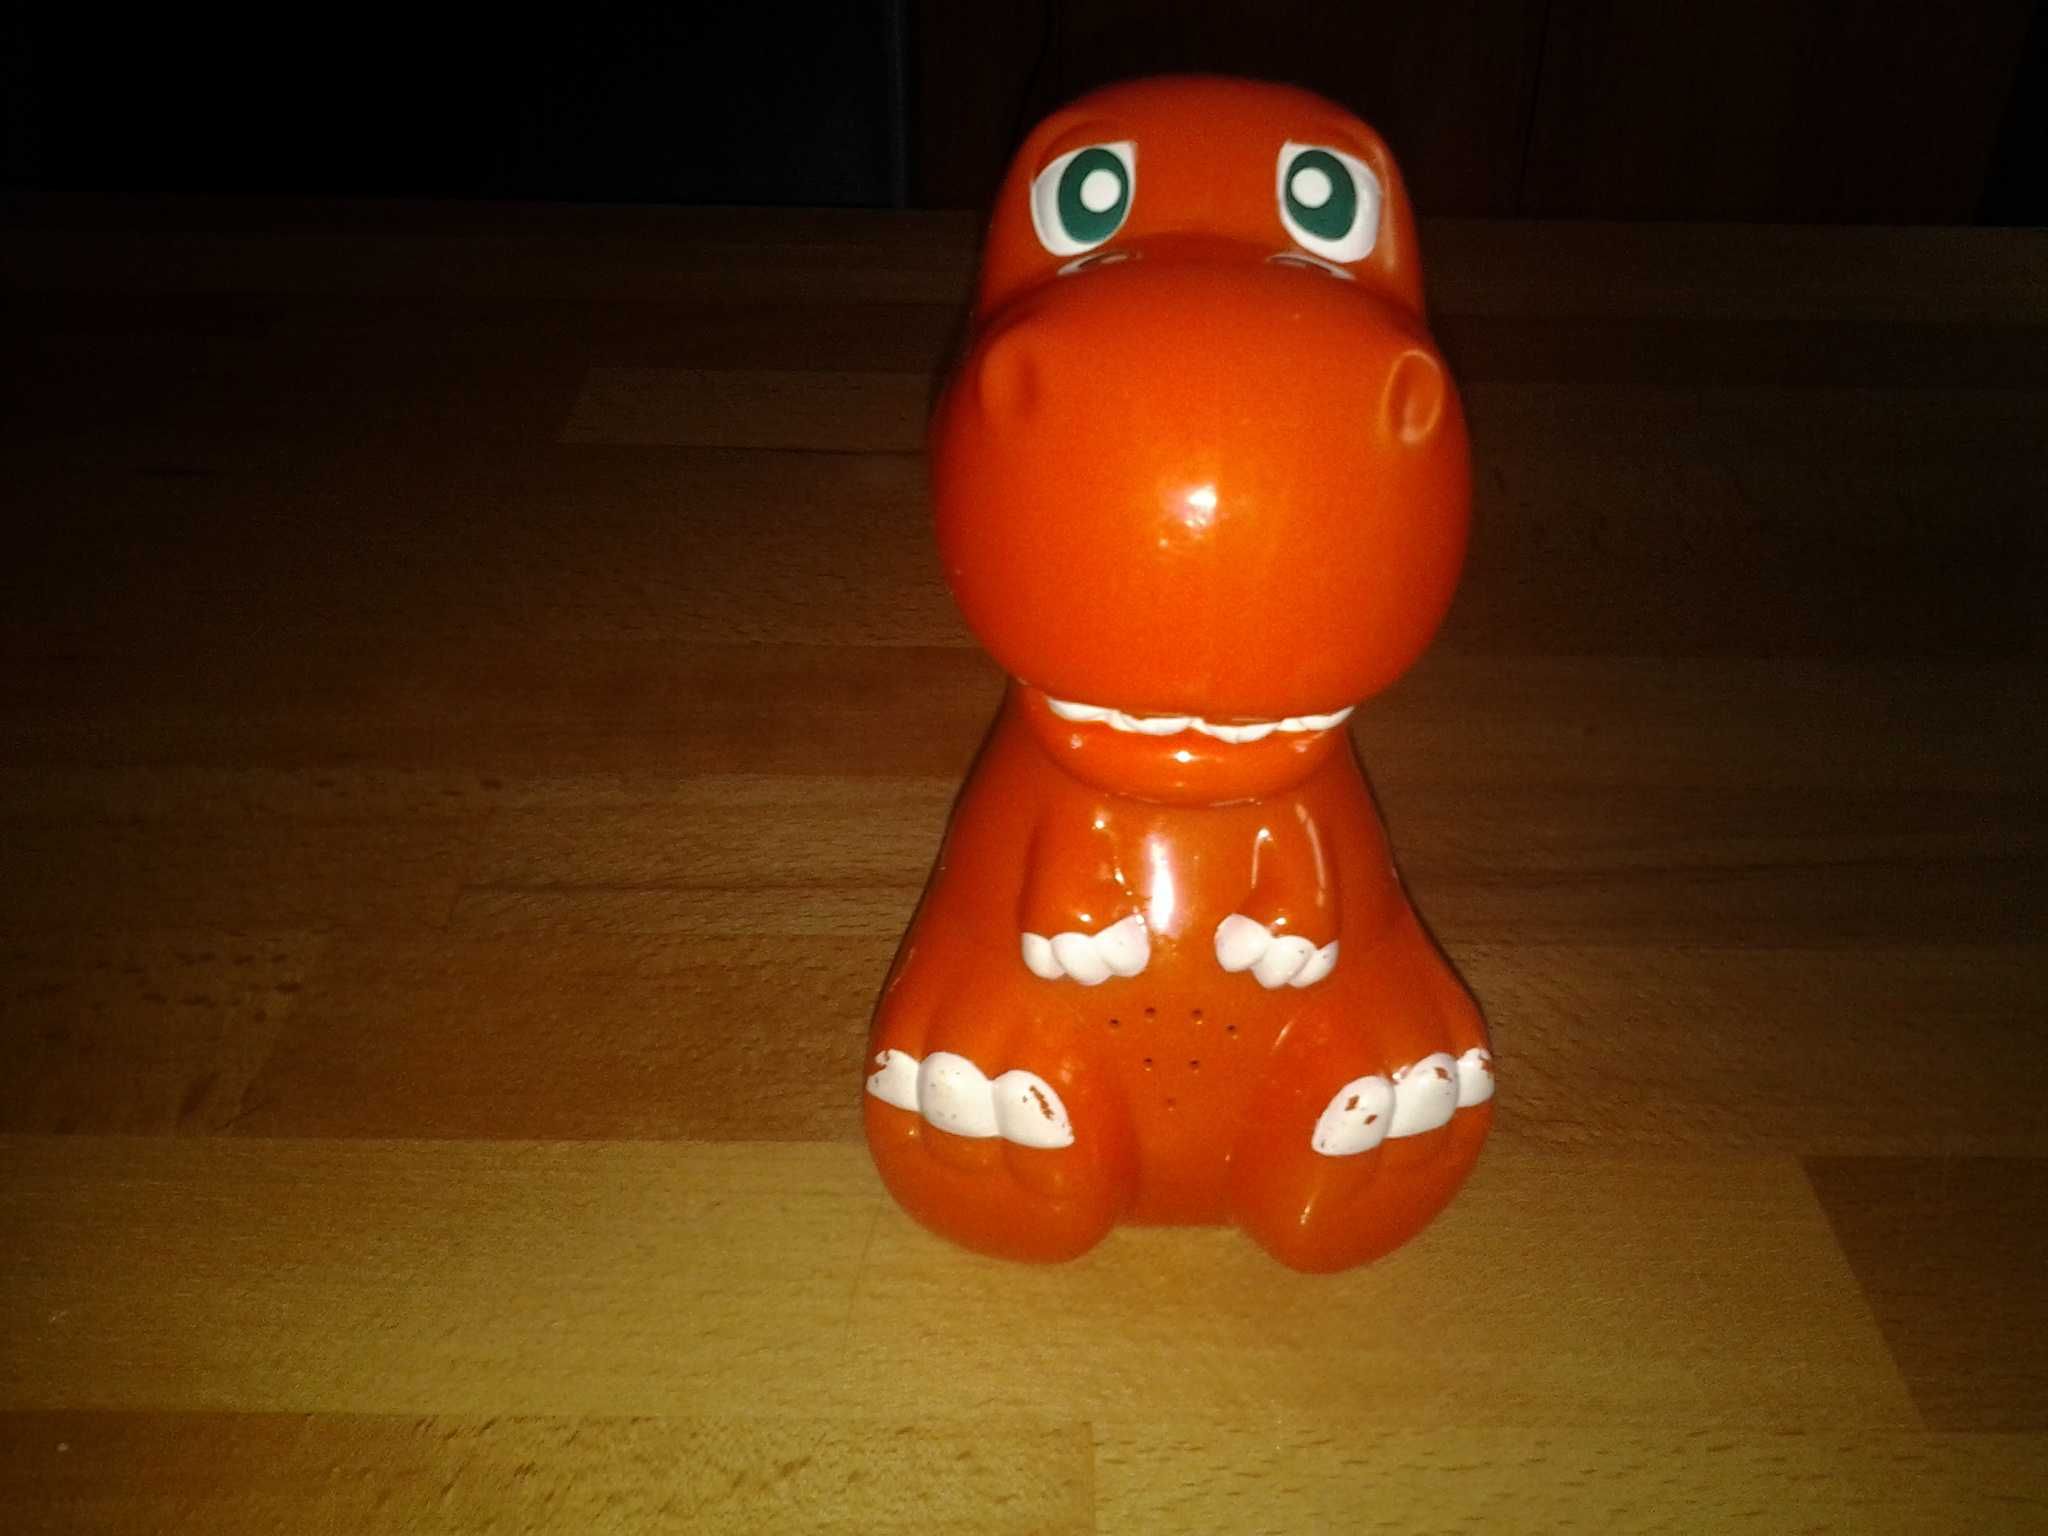 Dino Lanterna cu Sunete 16 cm jucarie copii